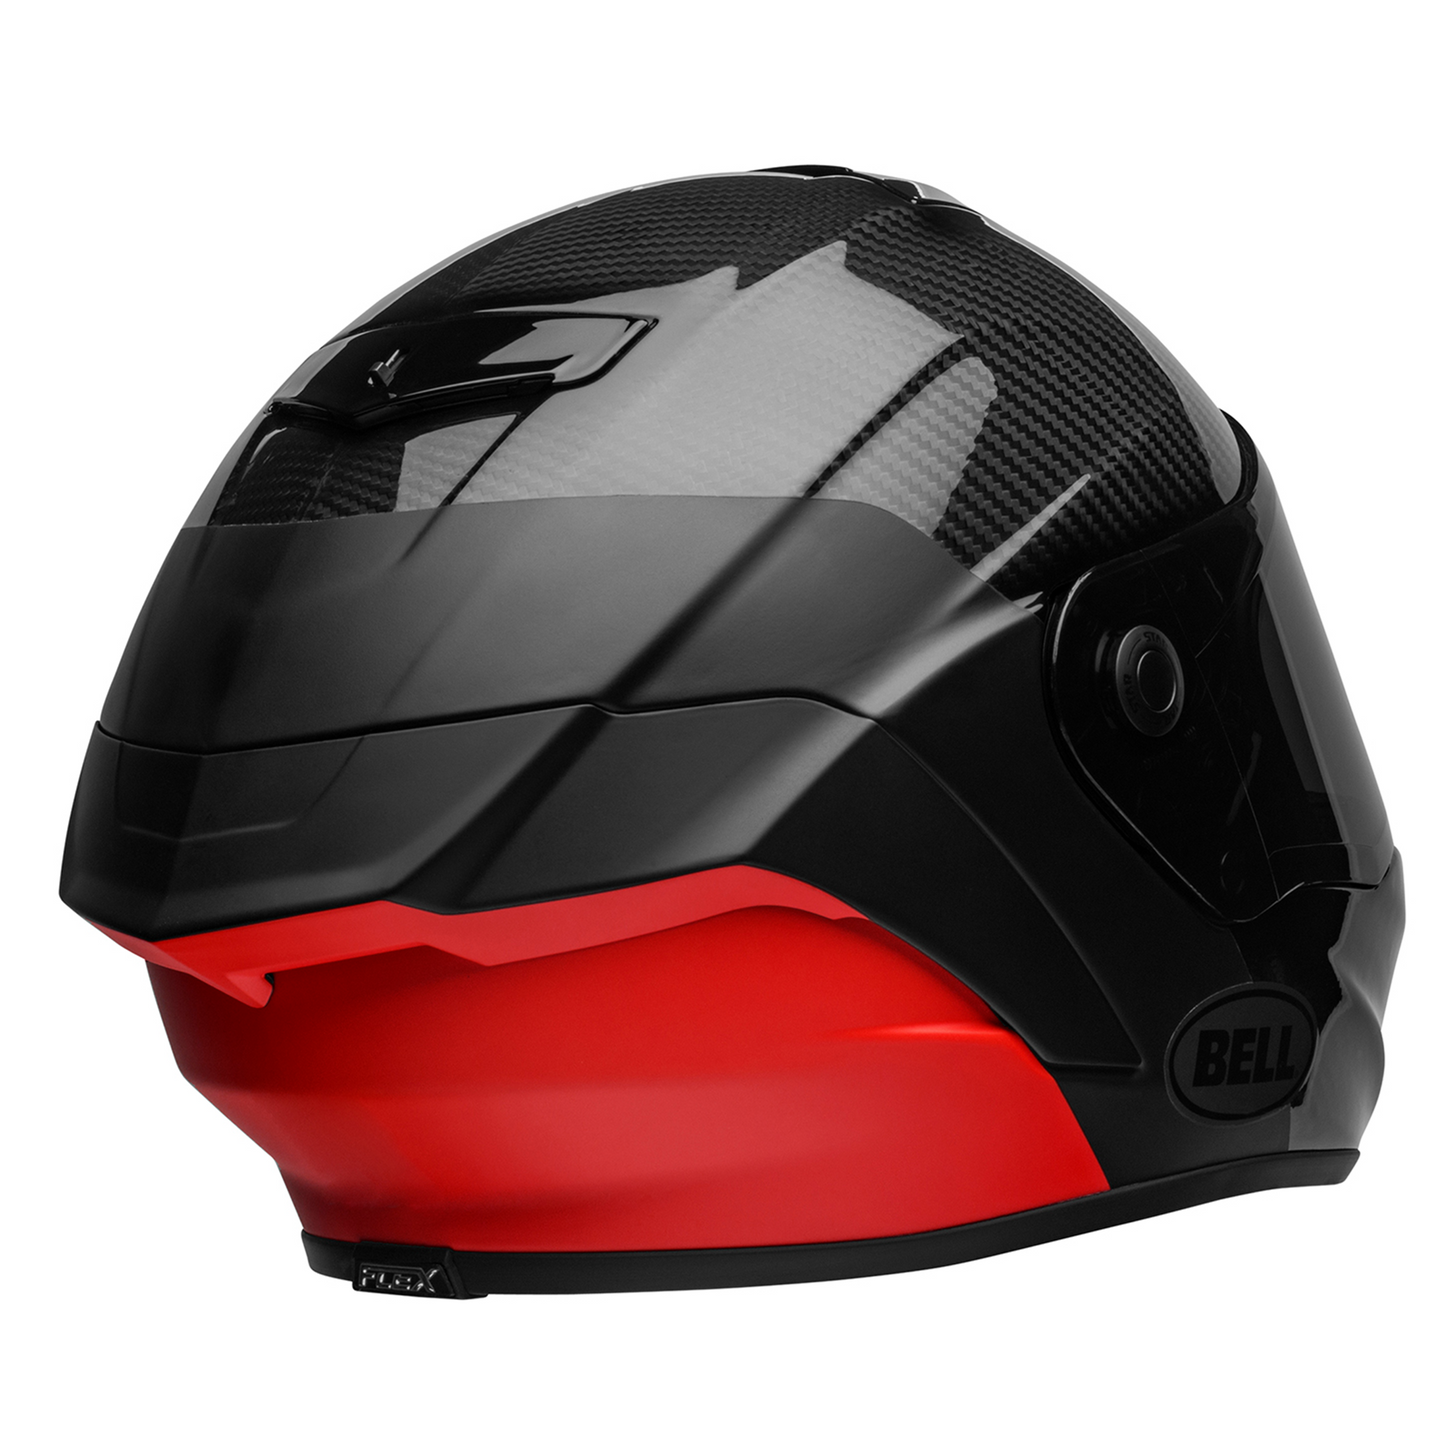 Bell Race Star Flex DLX - Lux Matt/Gloss Black/Red - Includes Protint Visor